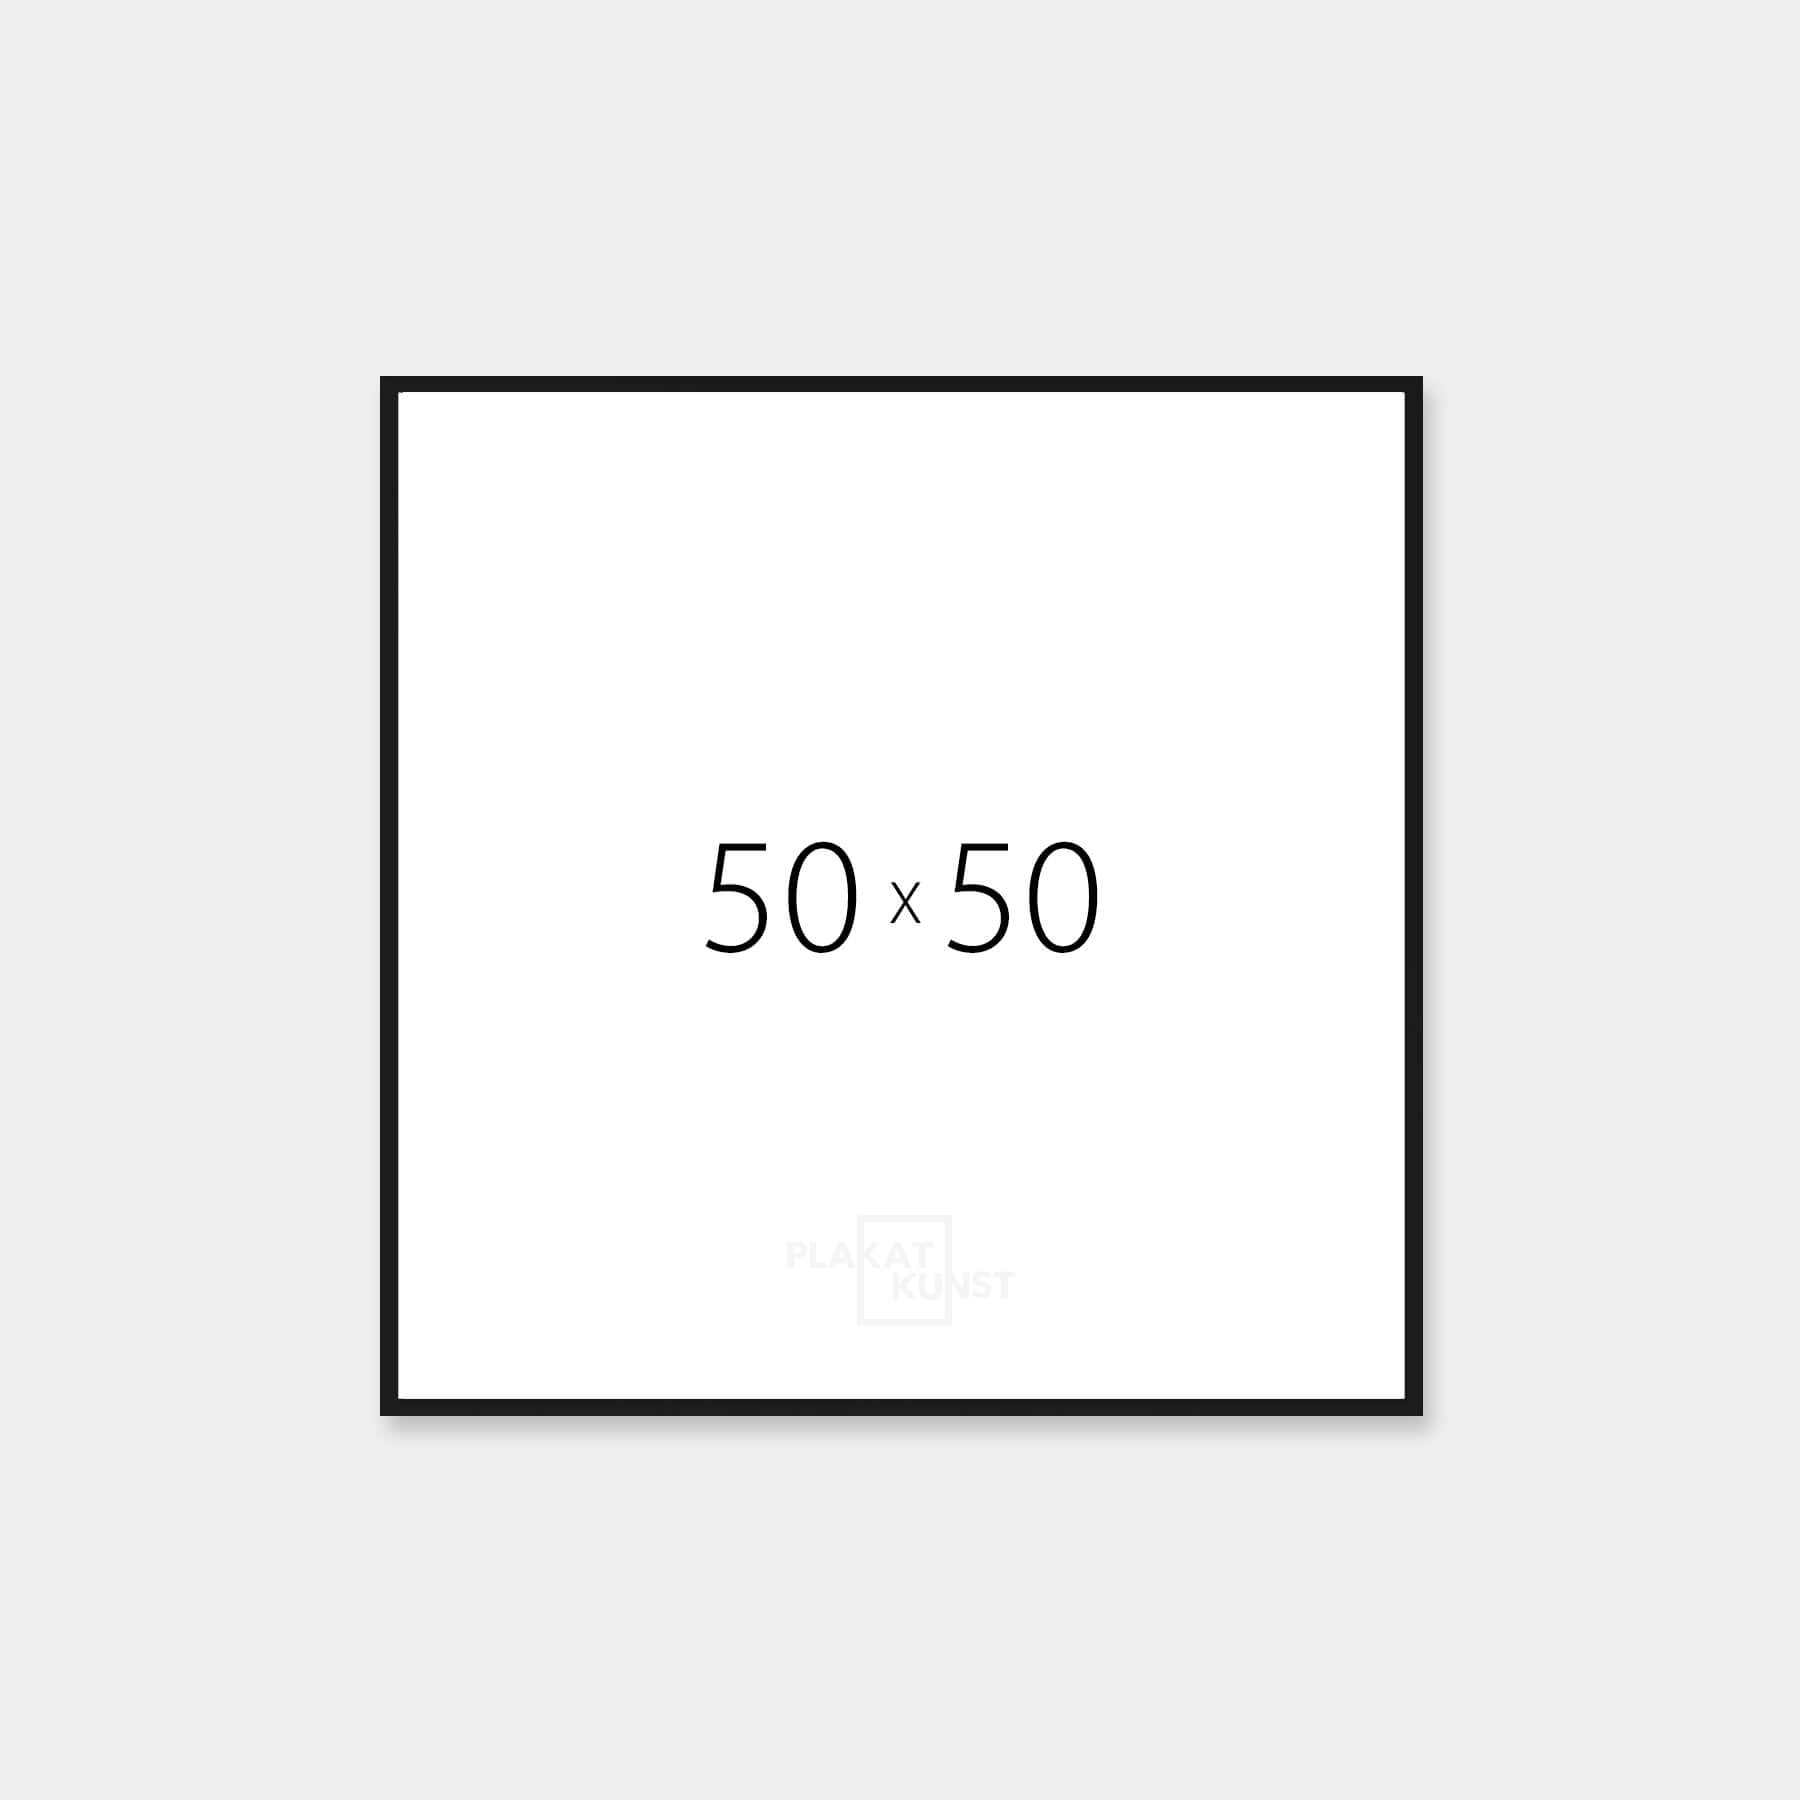 Sort aluramme - Smal (9 mm) - 50x50 cm